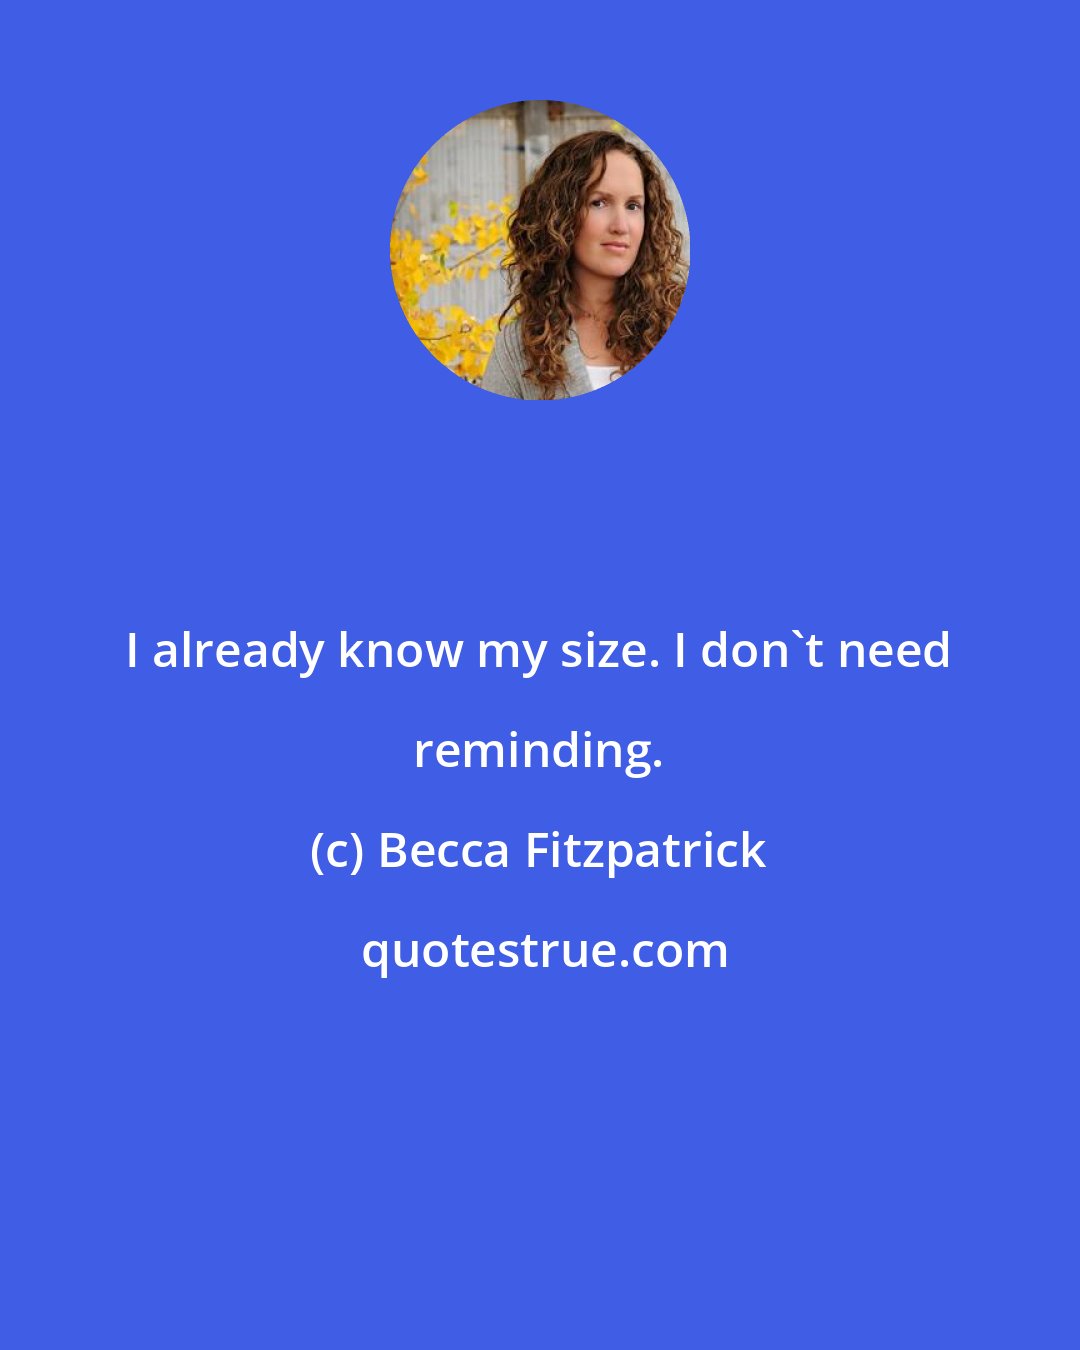 Becca Fitzpatrick: I already know my size. I don't need reminding.